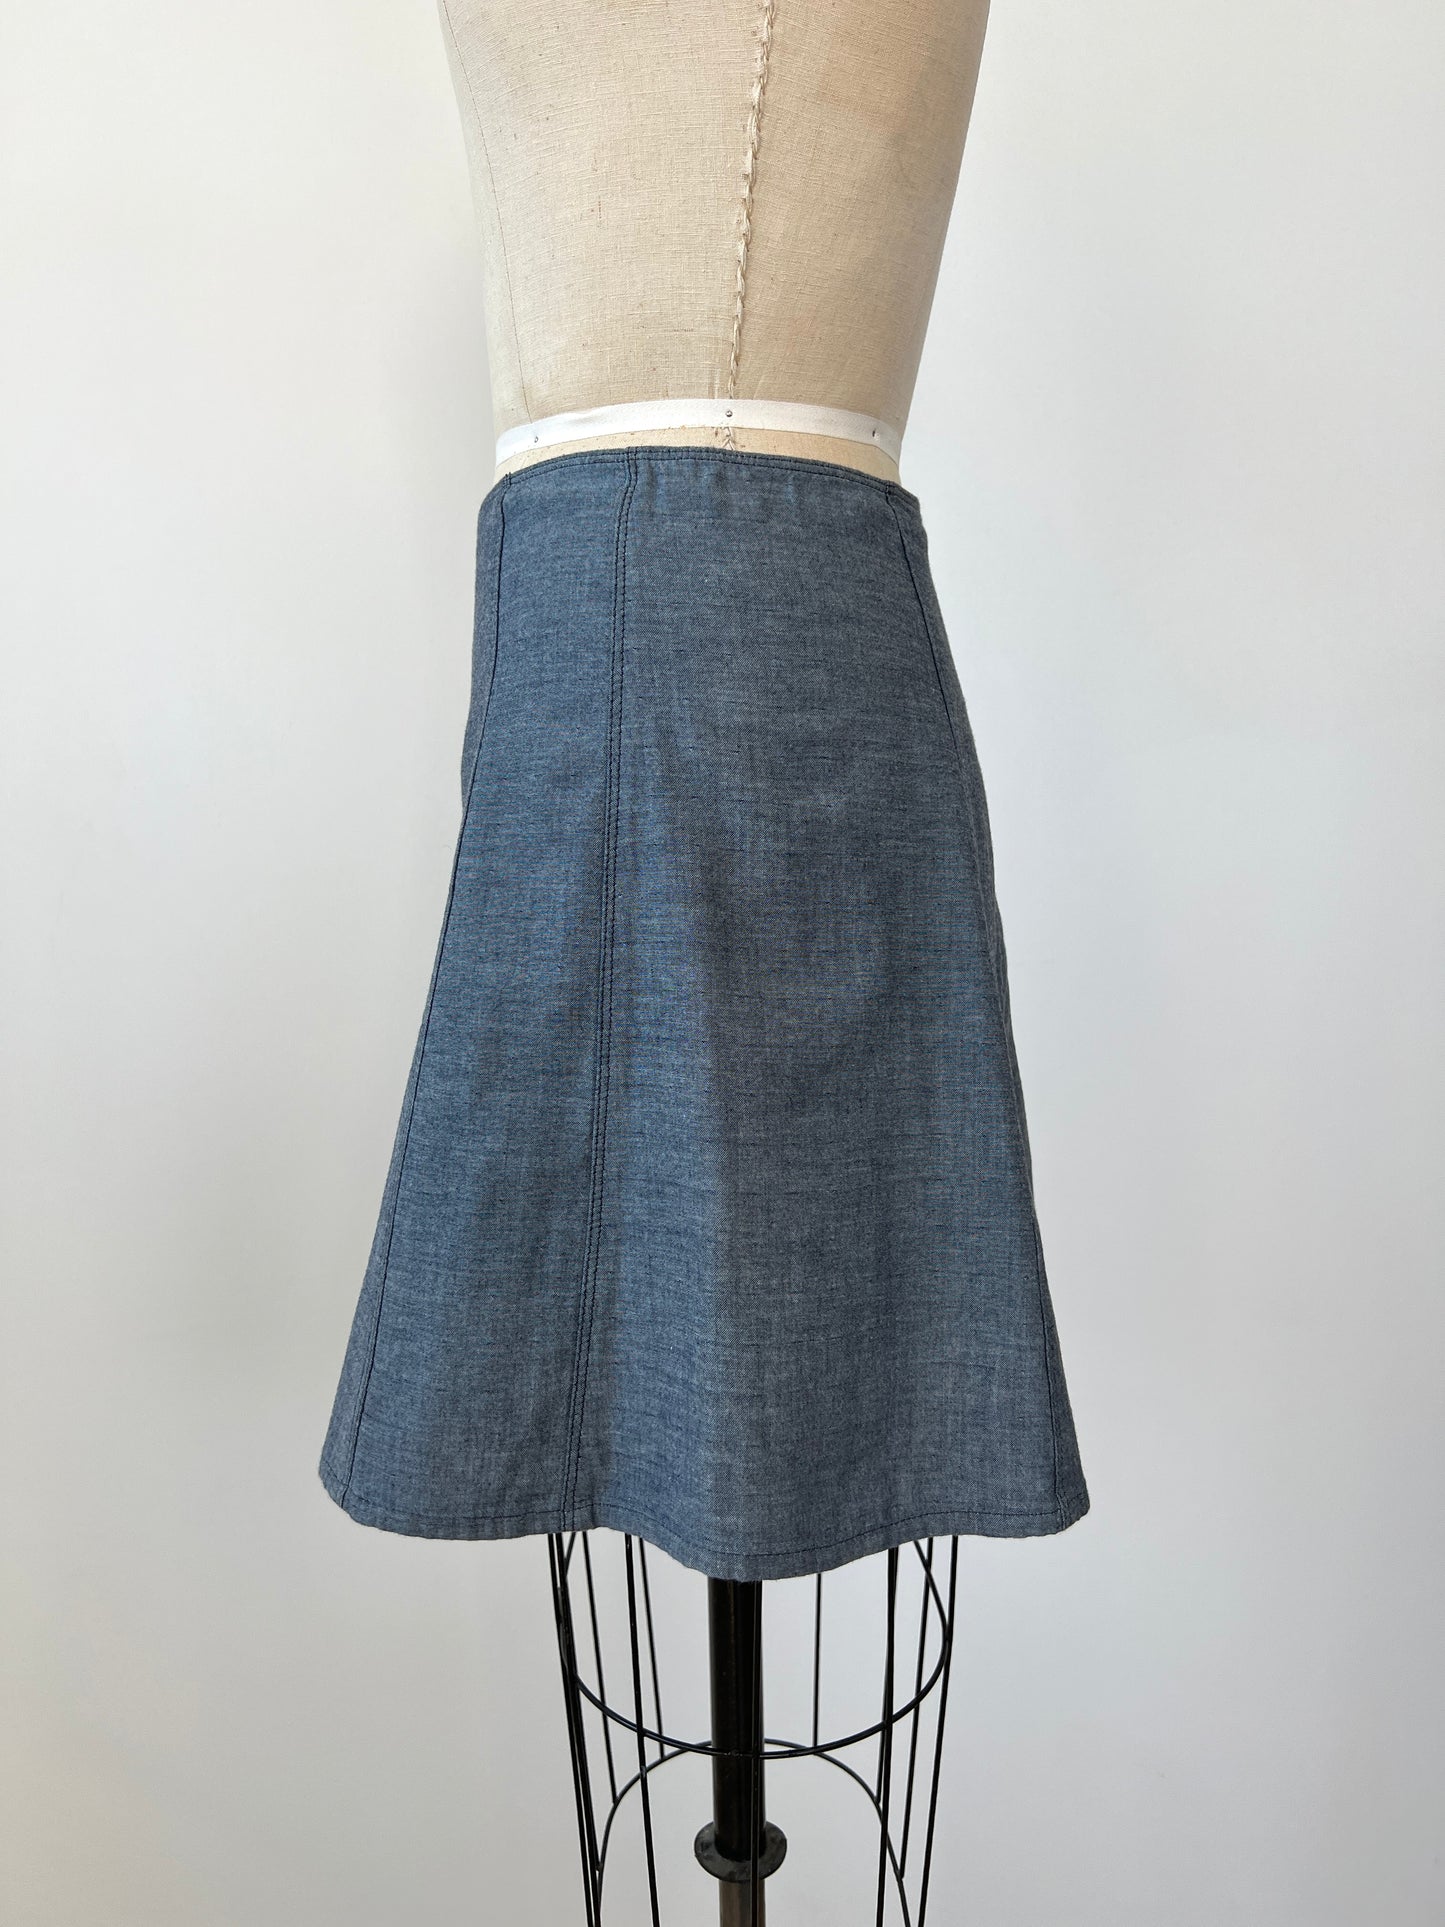 Mini jupe à coupe trapèze Bleu tramé façon denim (XS/S)